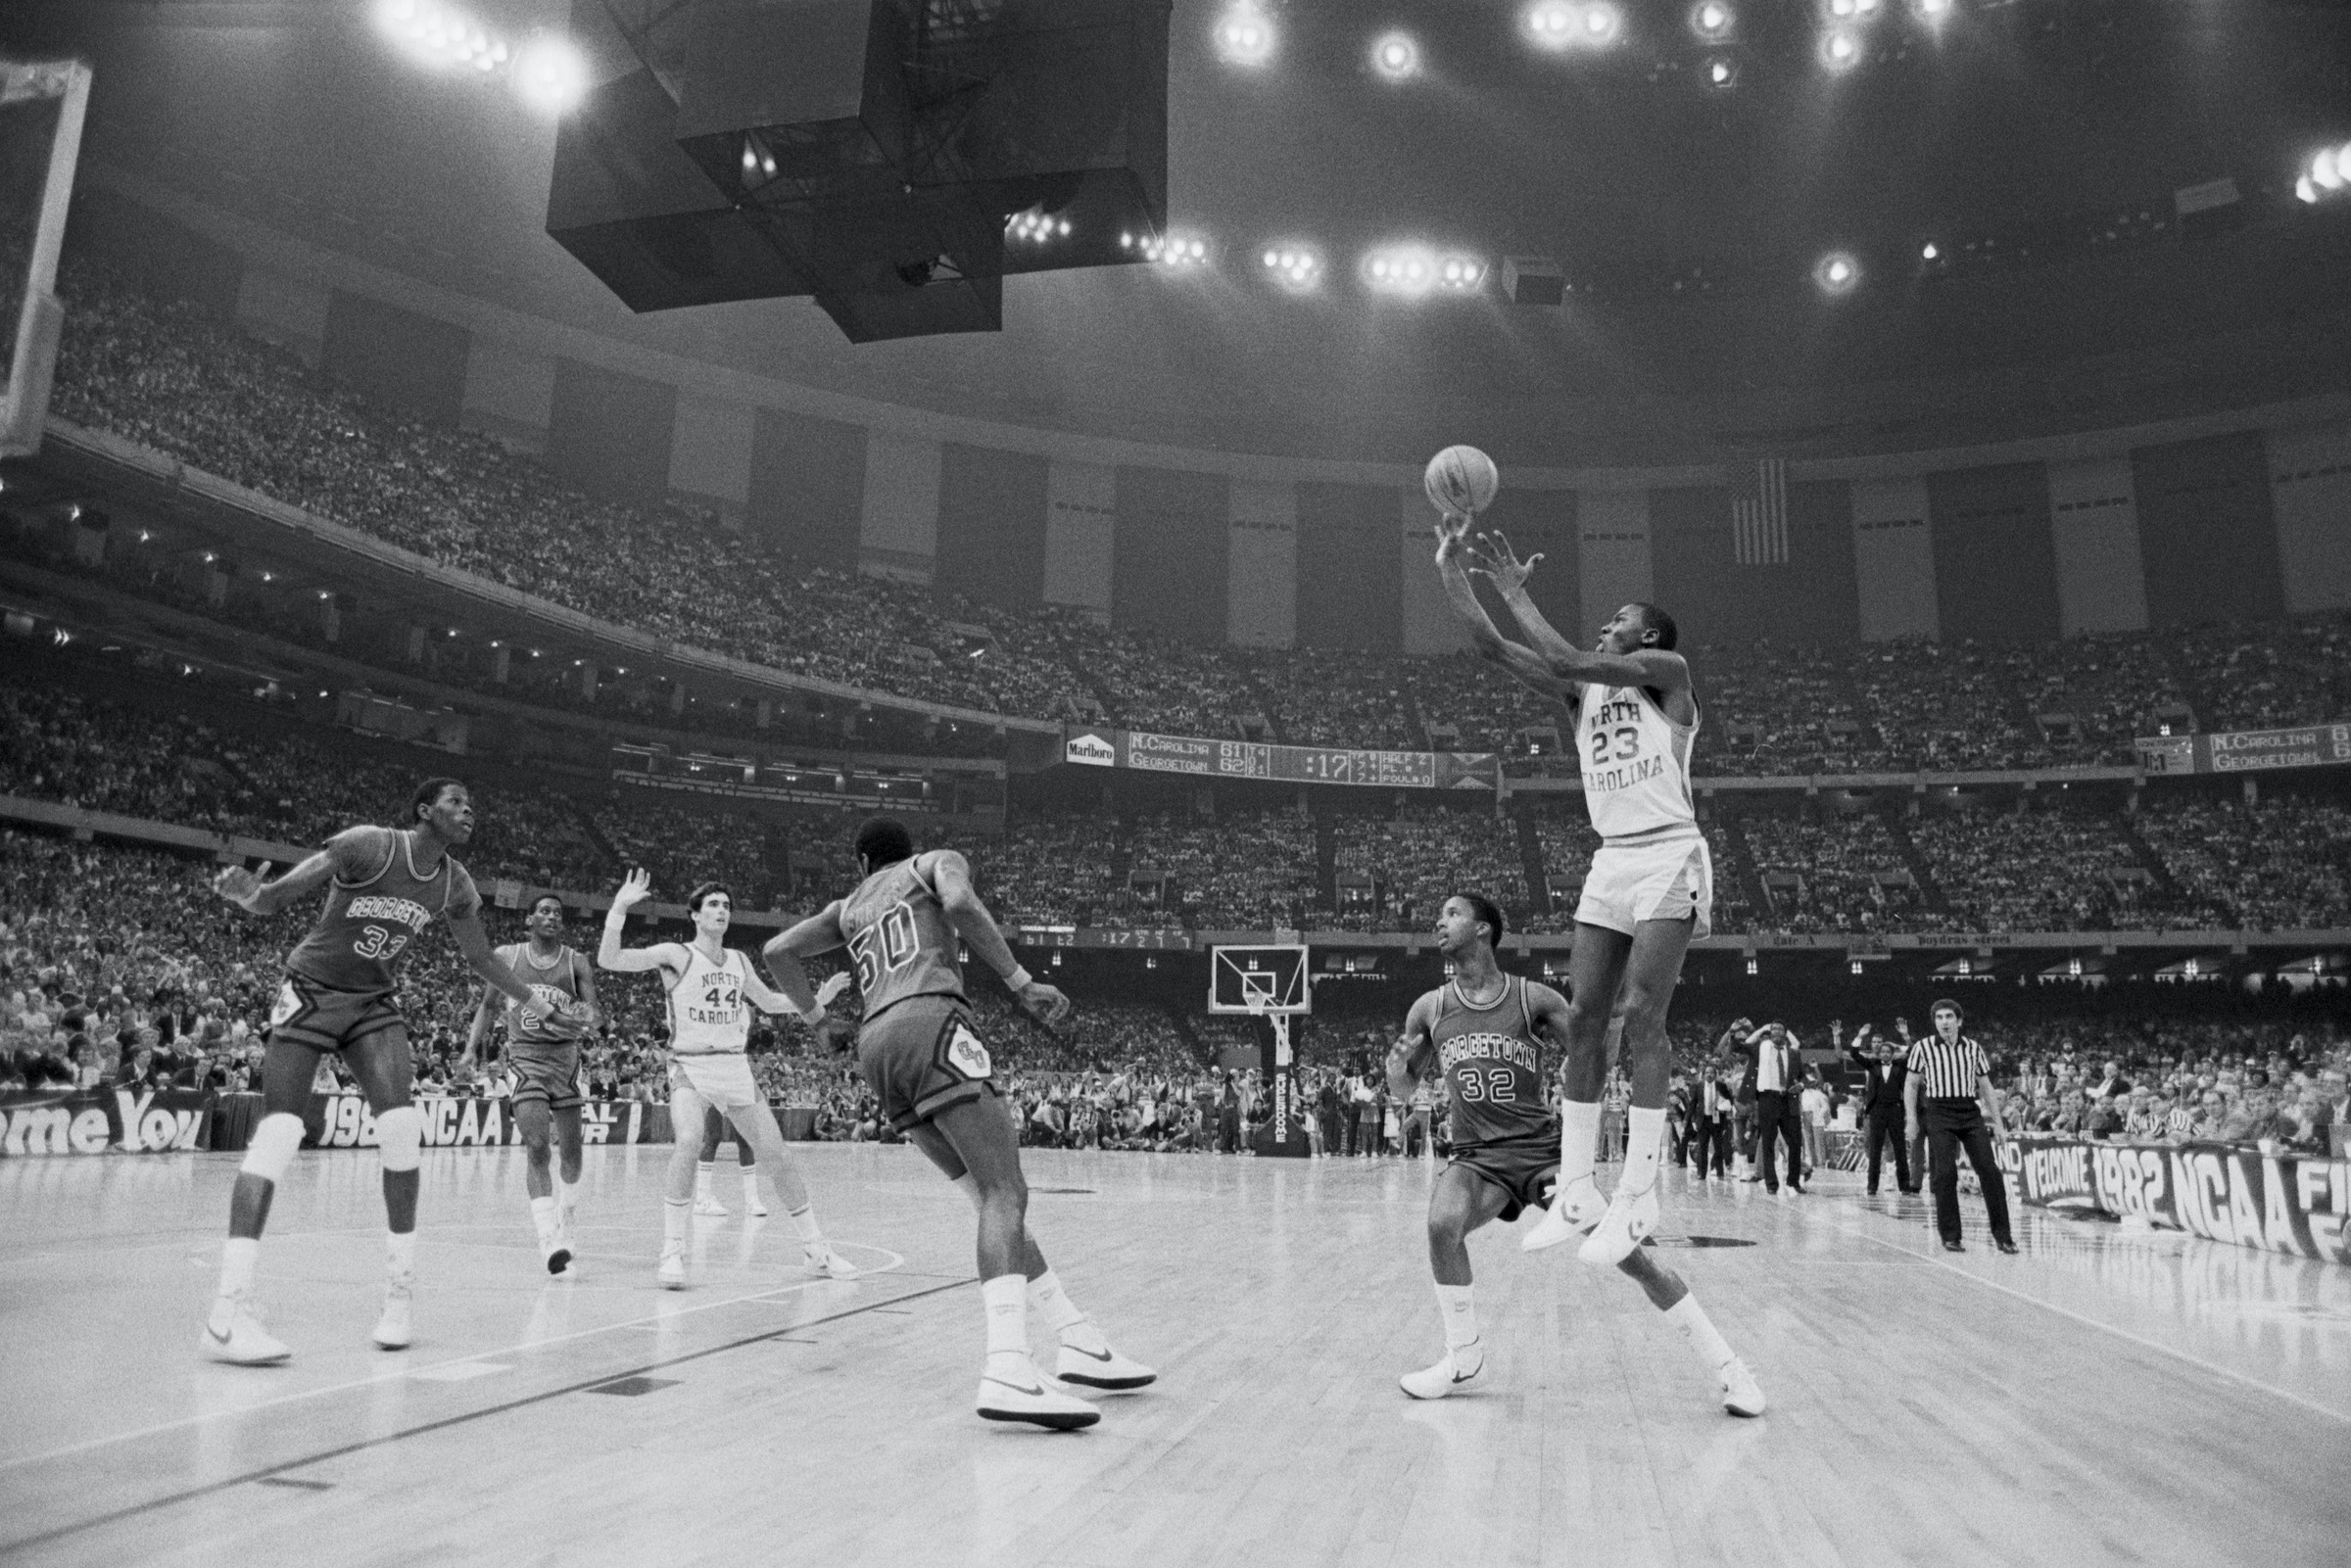 University of North Carolina basketball player Michael Jordan shoots the winning basket in the 1982 NCAA Finals against Georgetown University. (Bettmann Archive/Getty)